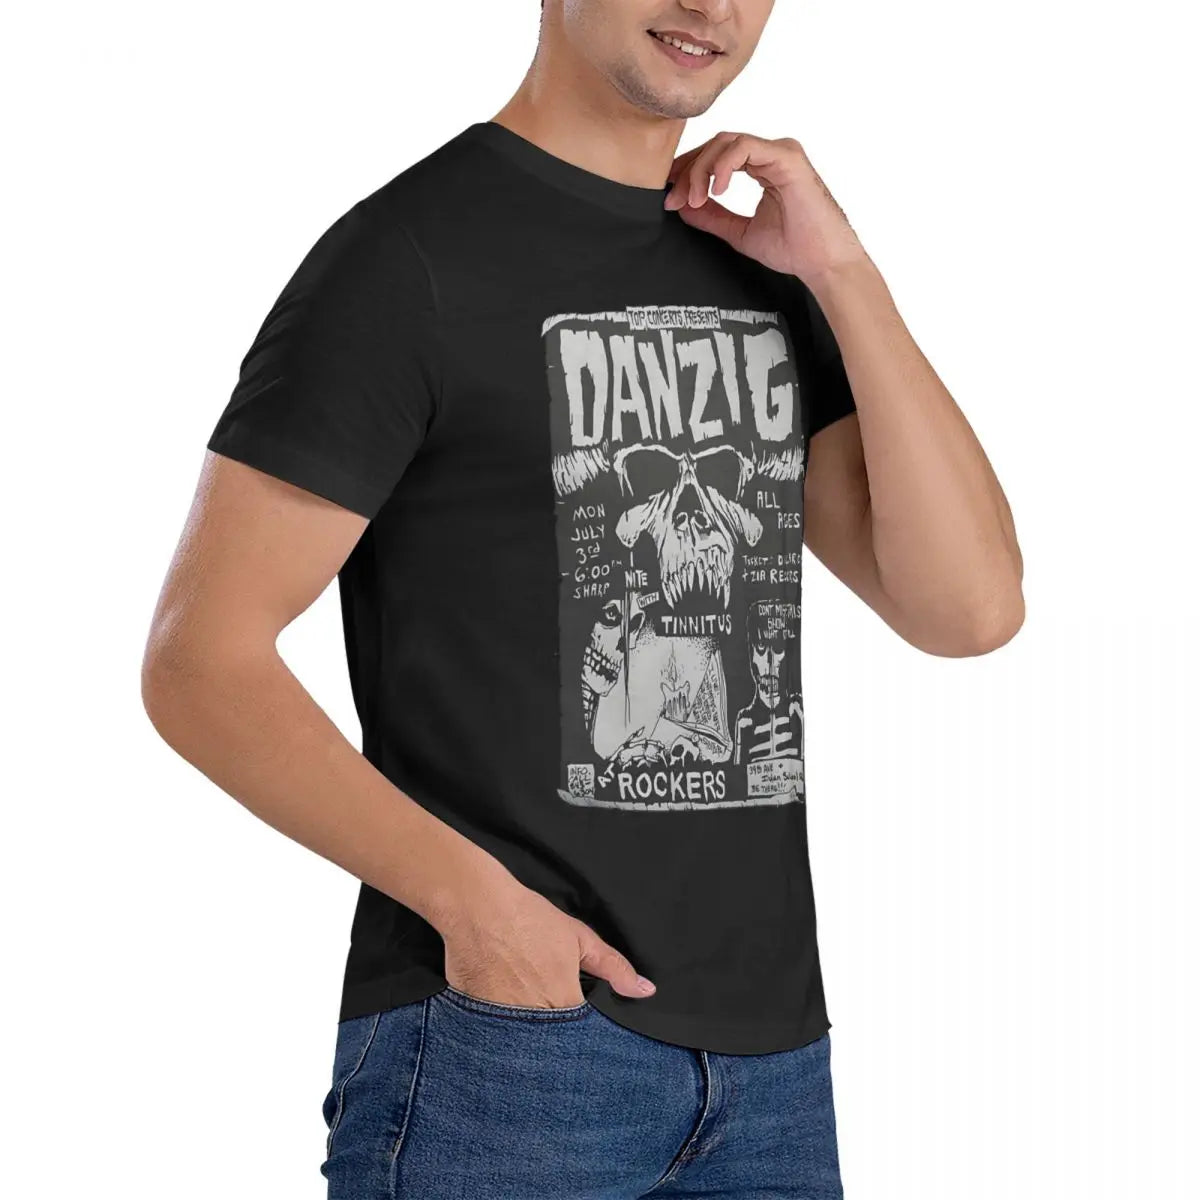 Danzig, Misfits, & Samhain Men T Shirts Unique Tee Shirt Short Sleeve Round Neck T-Shirt Cotton 4XL 5XL Clothing - Lizard Vigilante